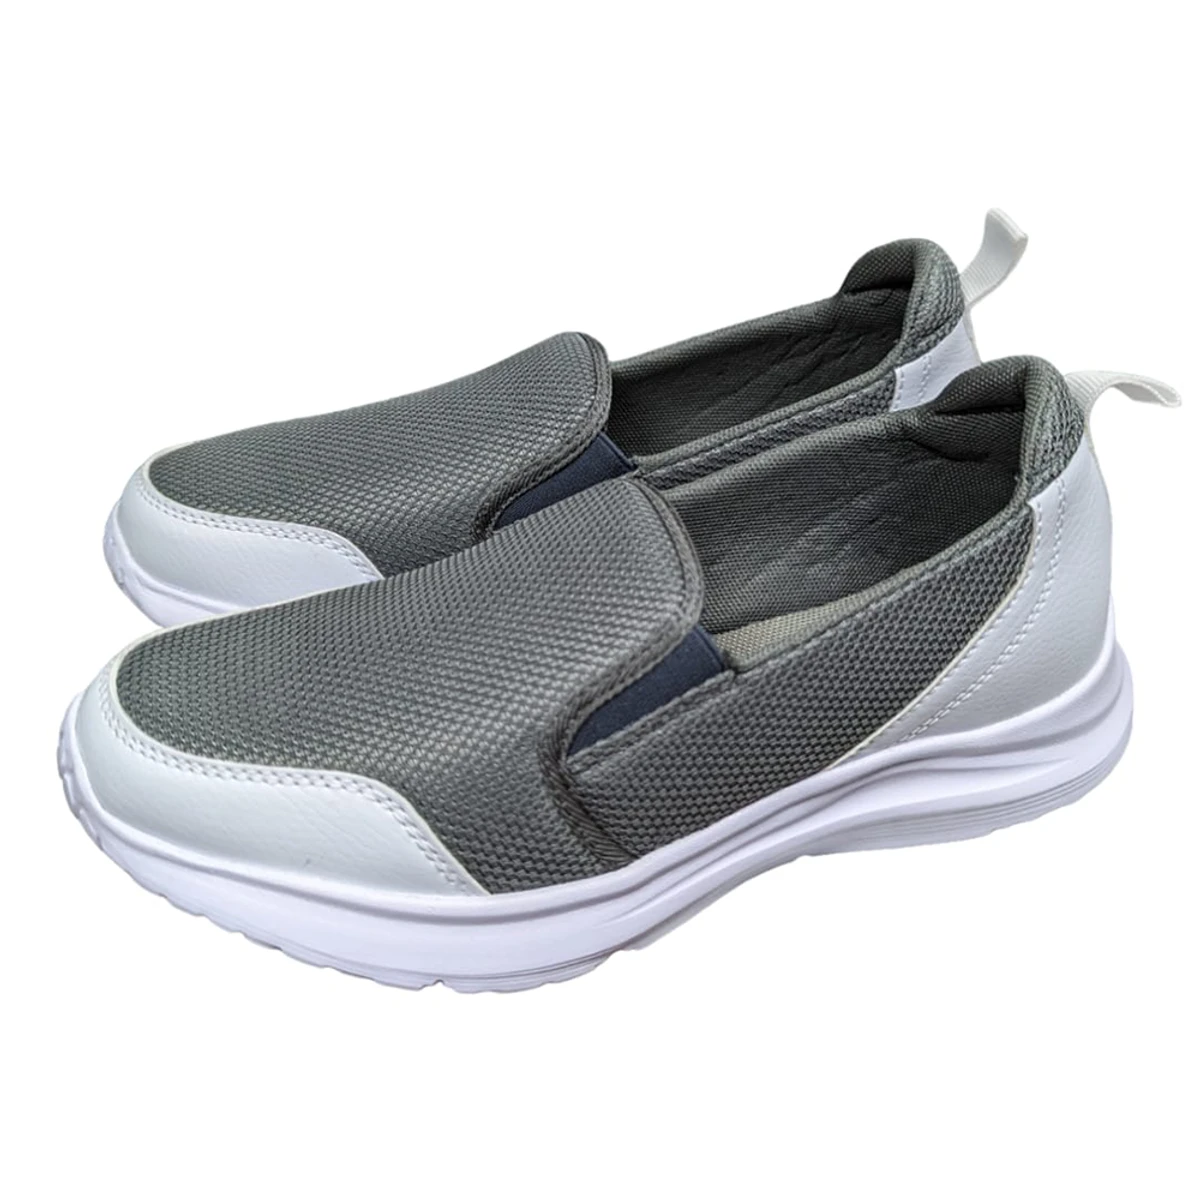 Lightweight Unisex Mesh Walking Sports Shoes - Grey - FLMN-20